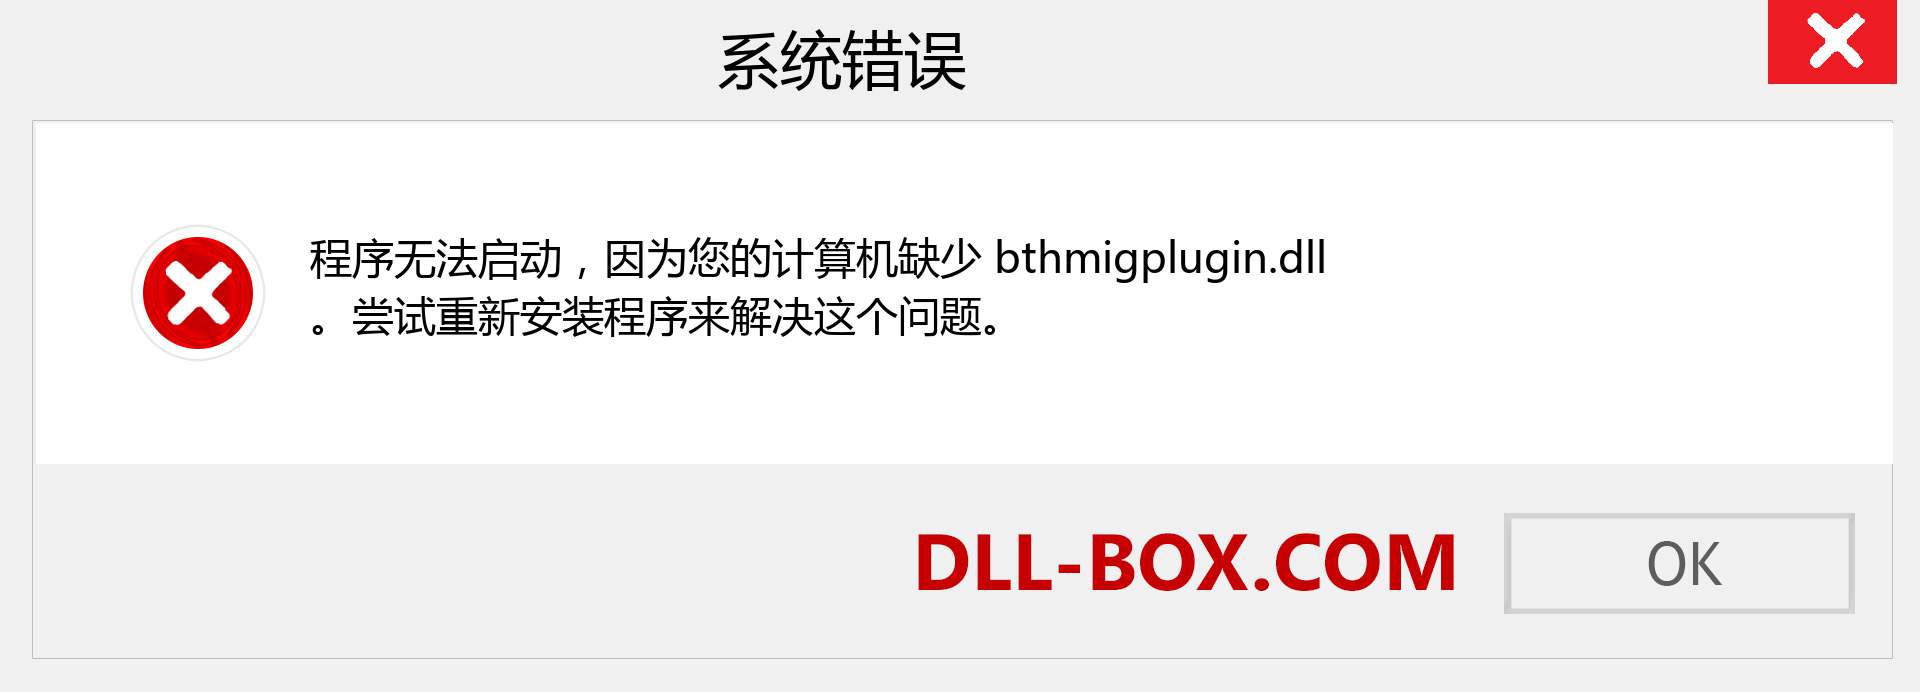 bthmigplugin.dll 文件丢失？。 适用于 Windows 7、8、10 的下载 - 修复 Windows、照片、图像上的 bthmigplugin dll 丢失错误